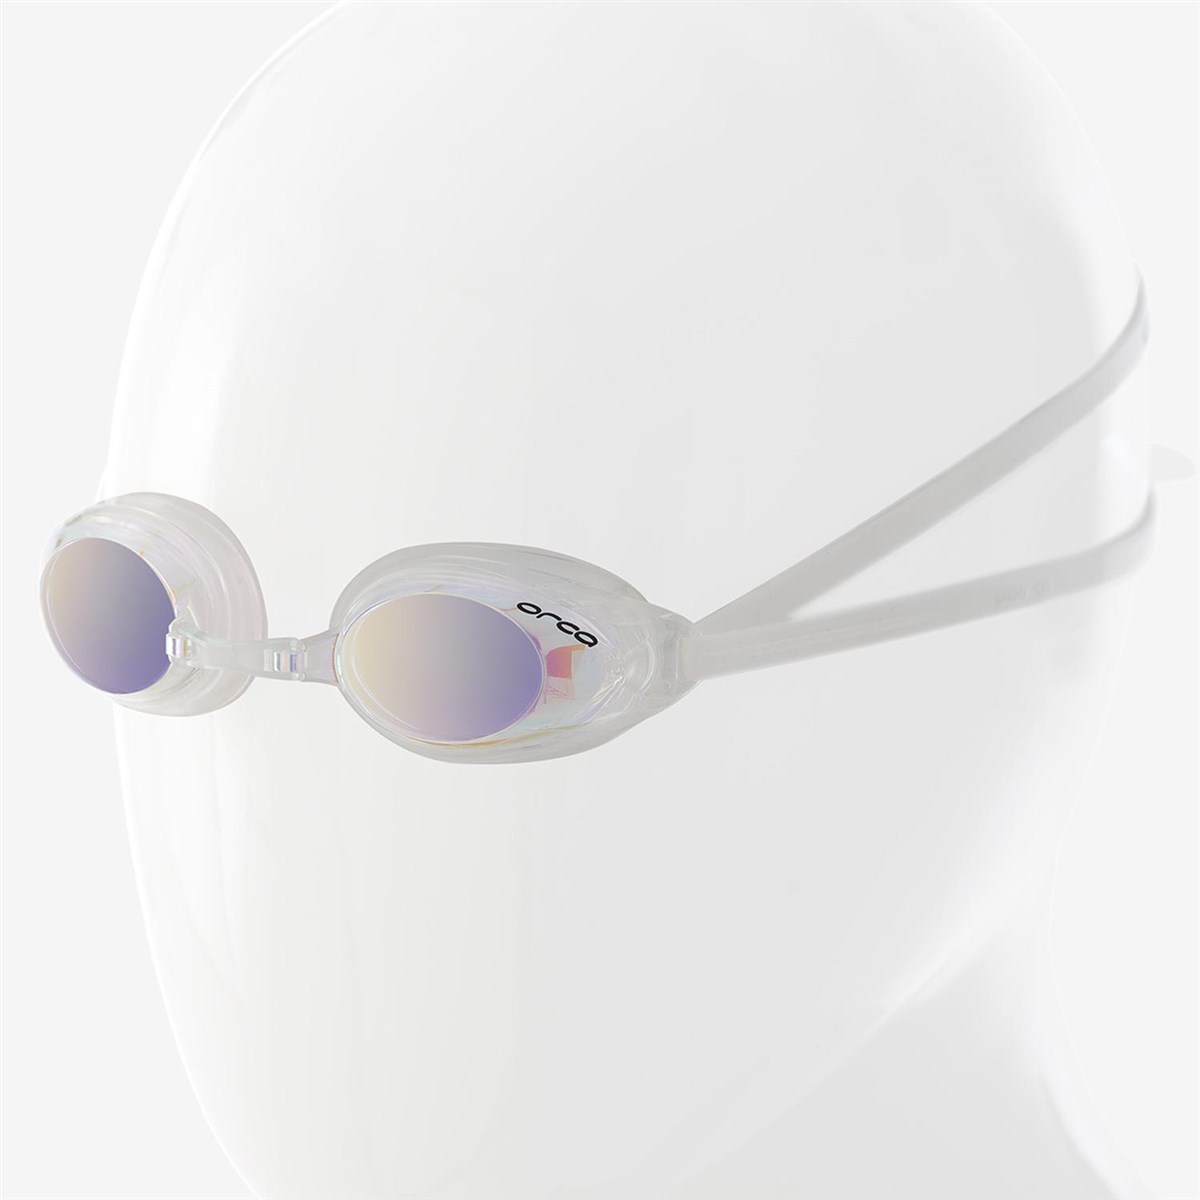 Orca Killa Speed Swimming Goggles product image